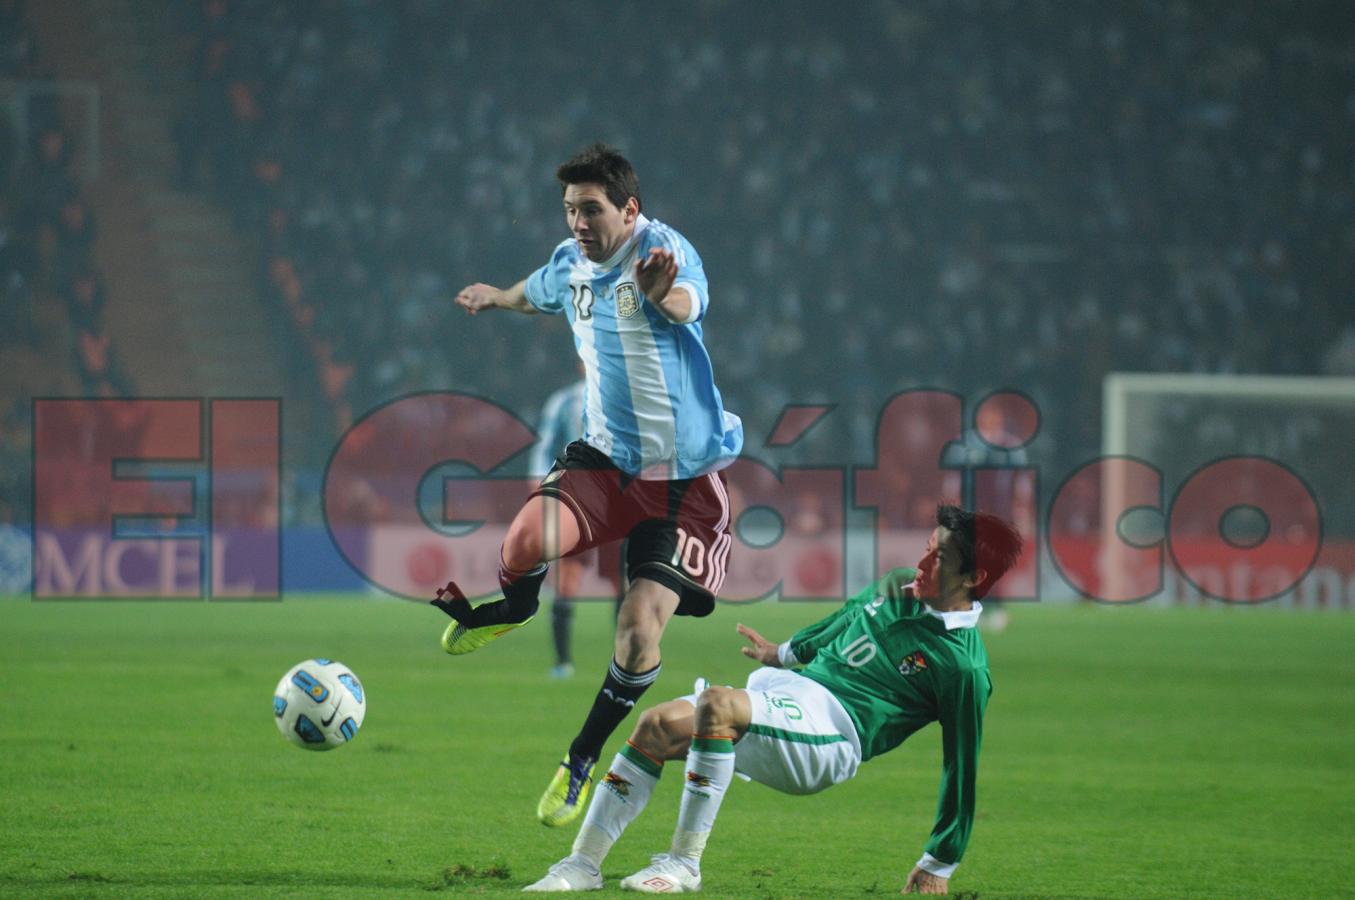 Imagen En 2011 cumplió 24 una semana antes del comienzo de la fatídica Copa América en Argentina